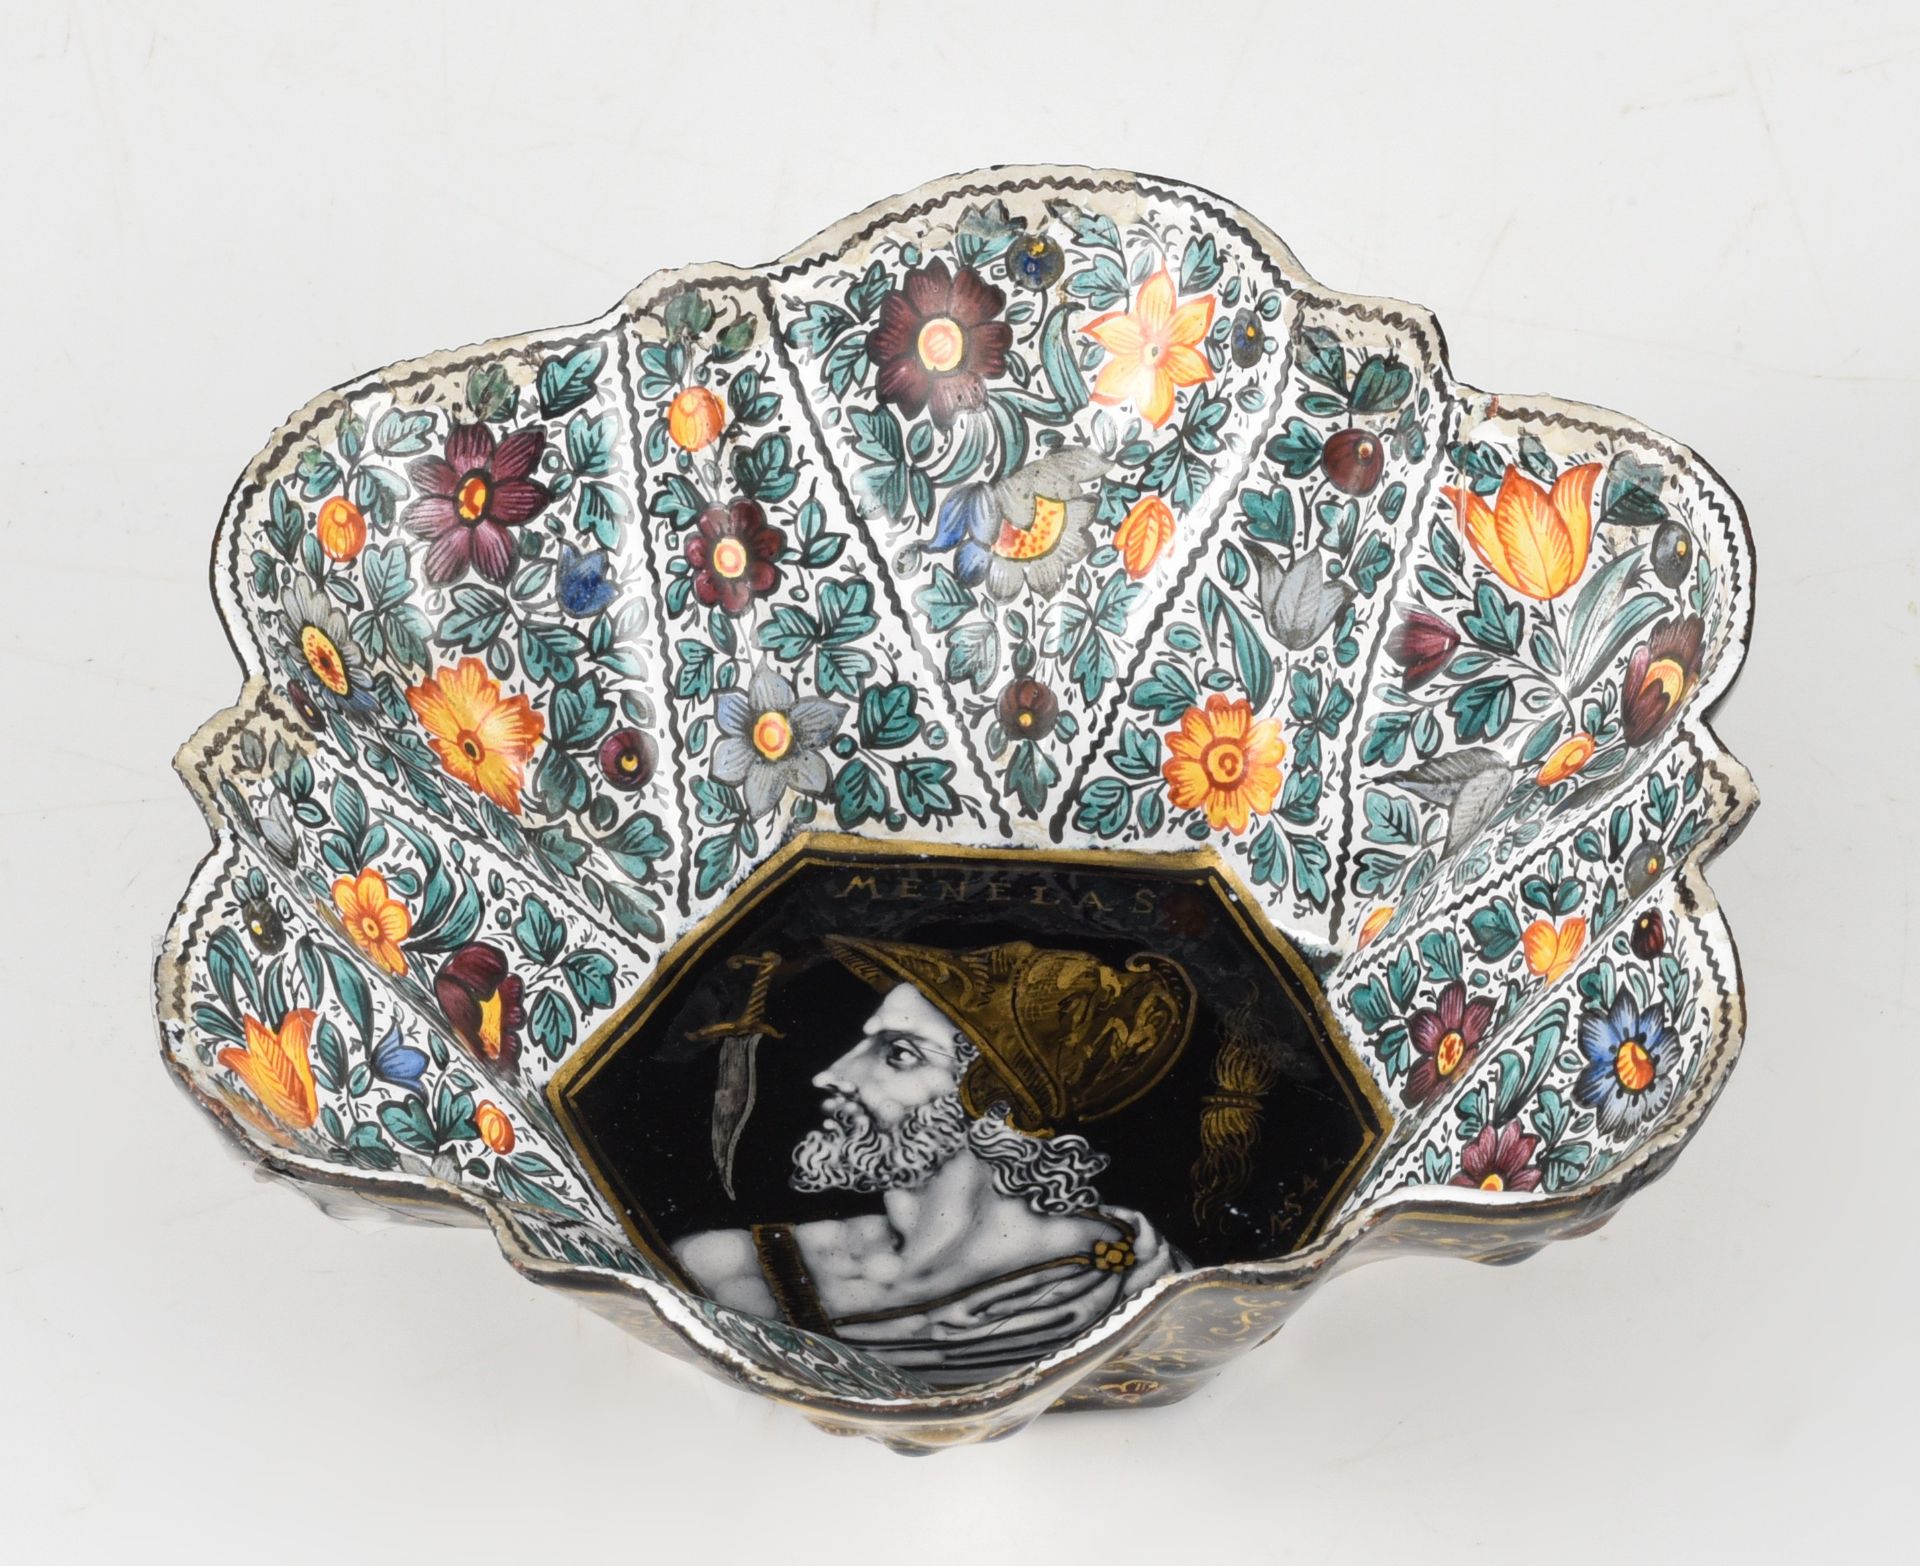 A Limoges enamel bowl (19thC) and 2 Limoges enamel plaques, (16thC), H 4,2 / 12,5 x 7,5 cm - Image 11 of 20